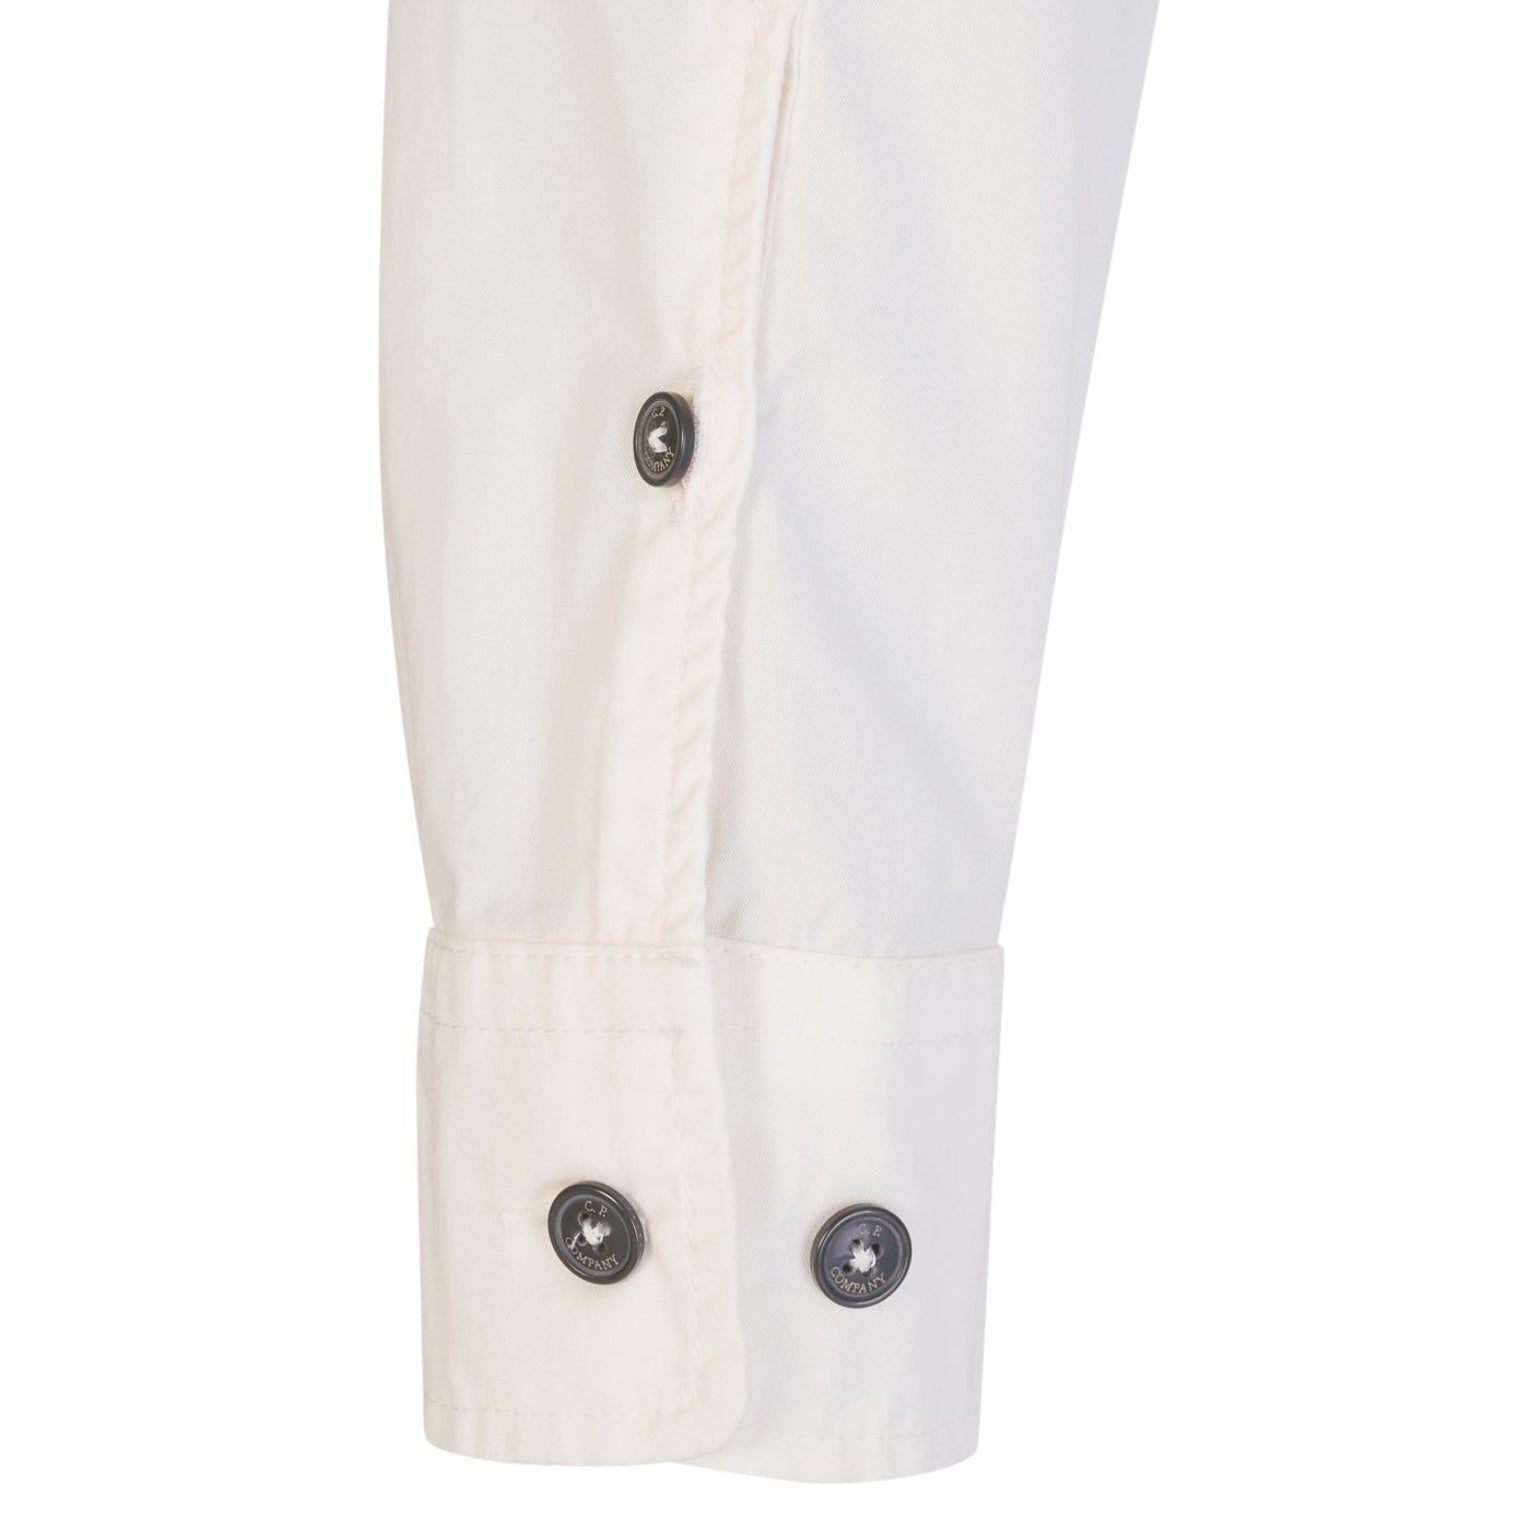 CP Company Gaberdine Long Sleeve Shirts - 103 White - Escape Menswear